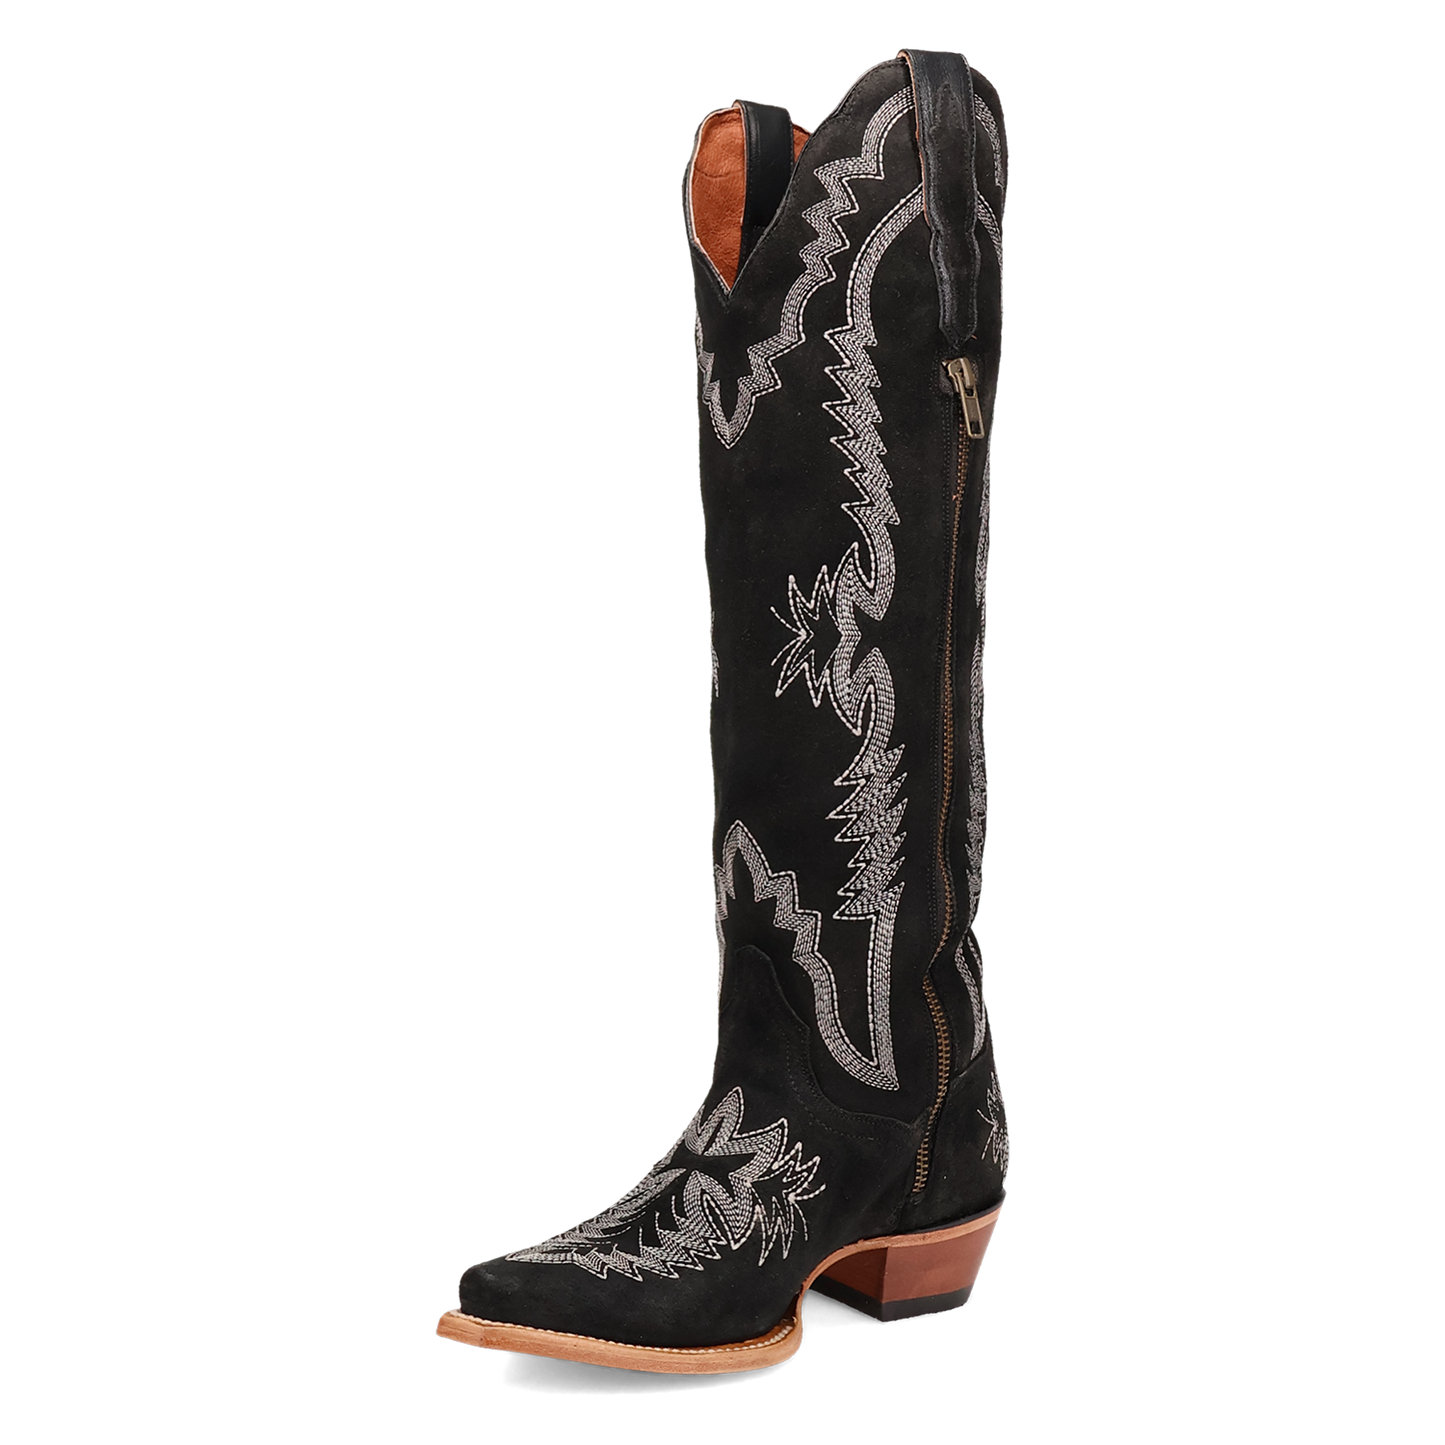 Dan Post Ladies Marlowe Black Suede Leather Tall Boots DP5110